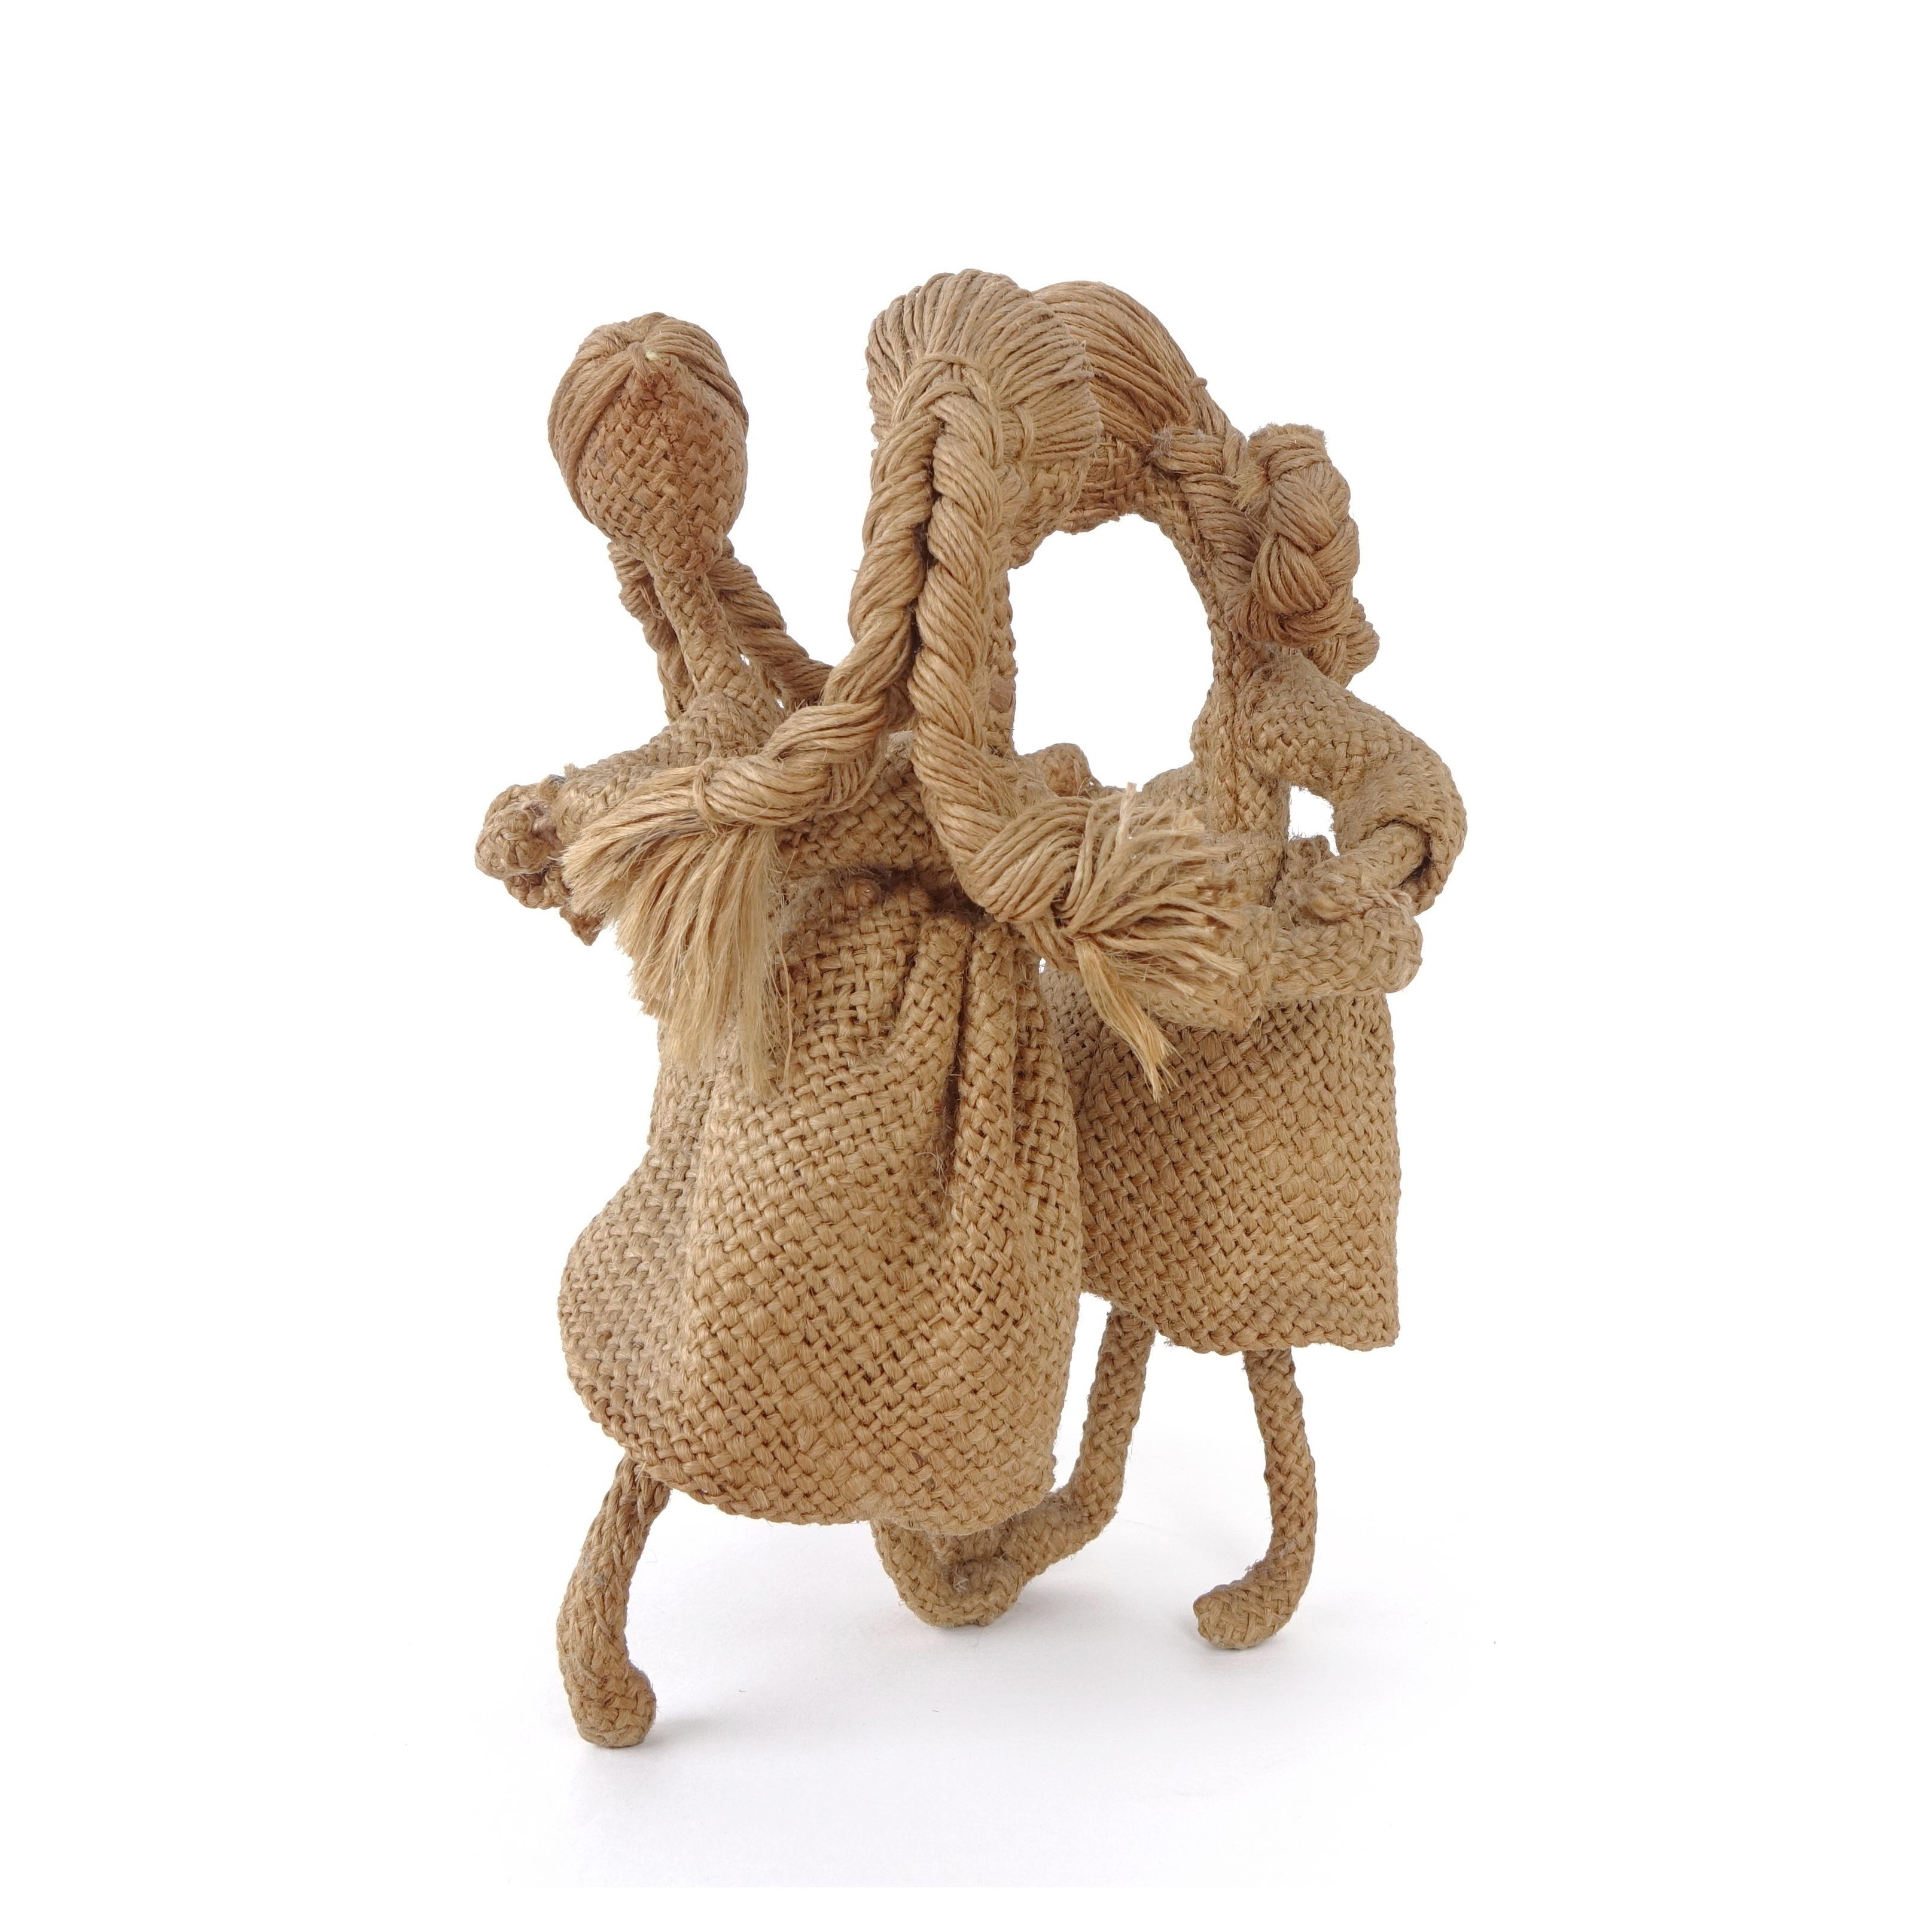 Italian Textile Art Sculpture by Maria Lai, Round Dance with Three Female Figures, Sardi